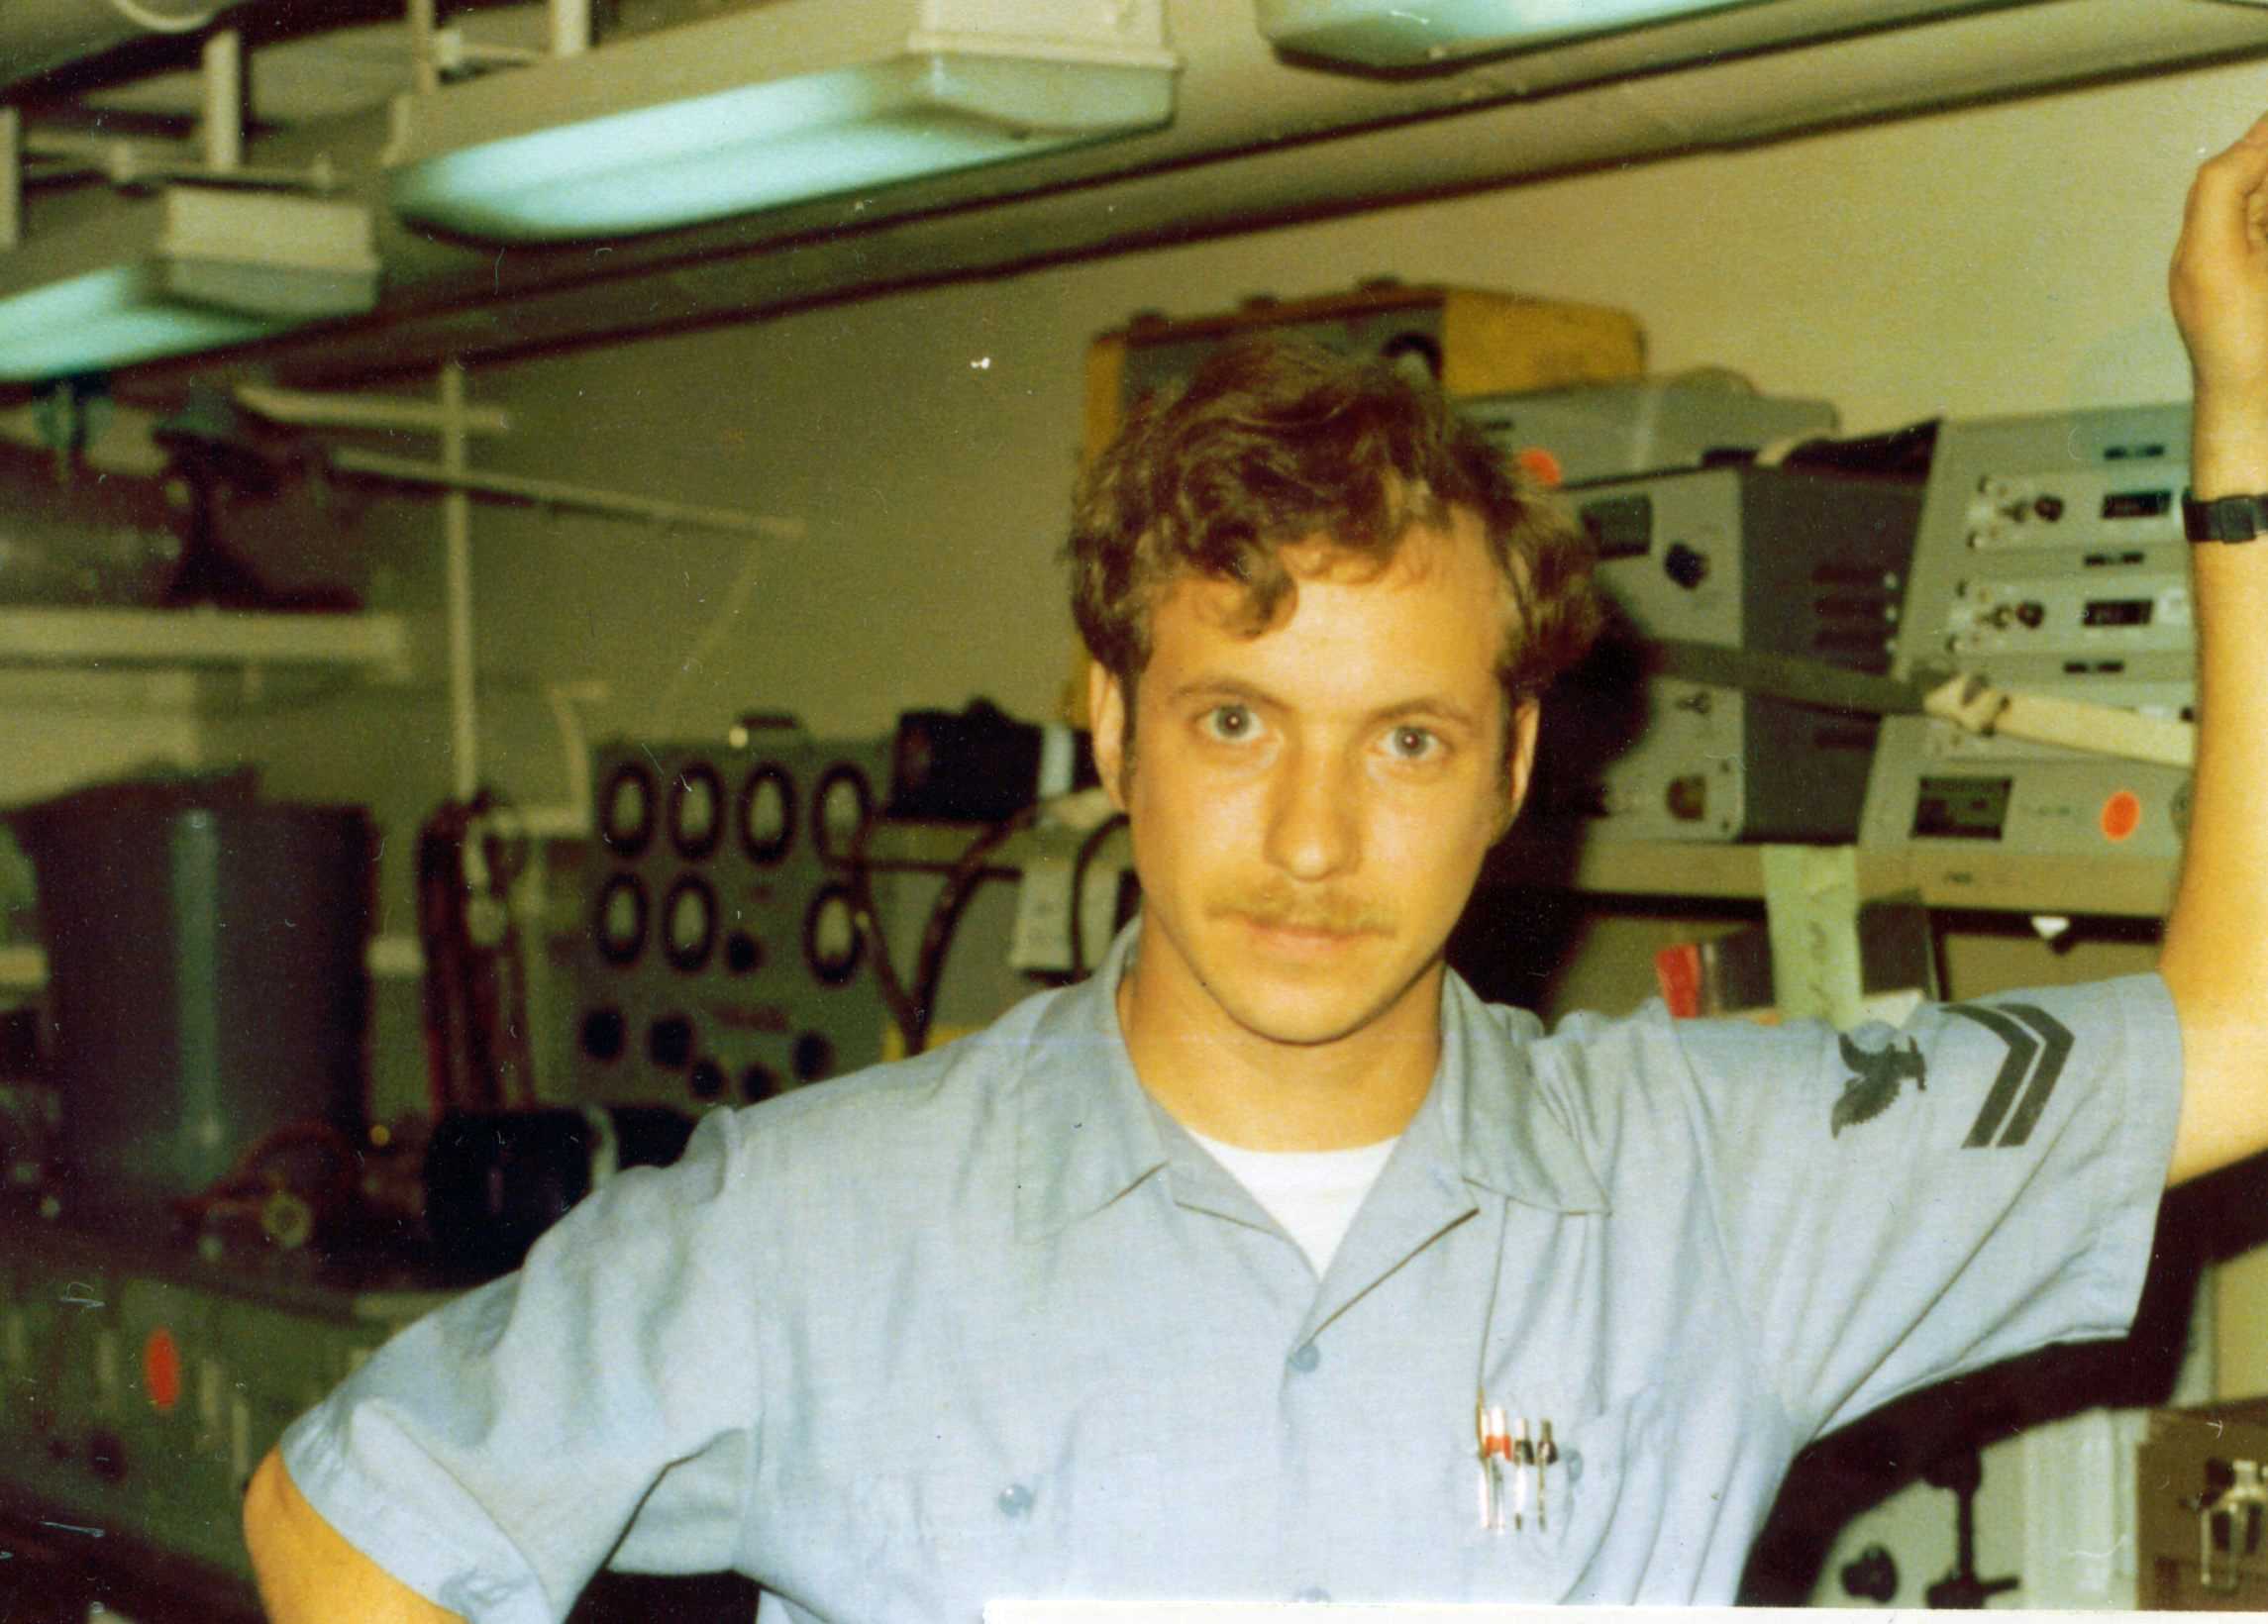 Petty Officer Second Class Jeff Dyrek, the Webmaster